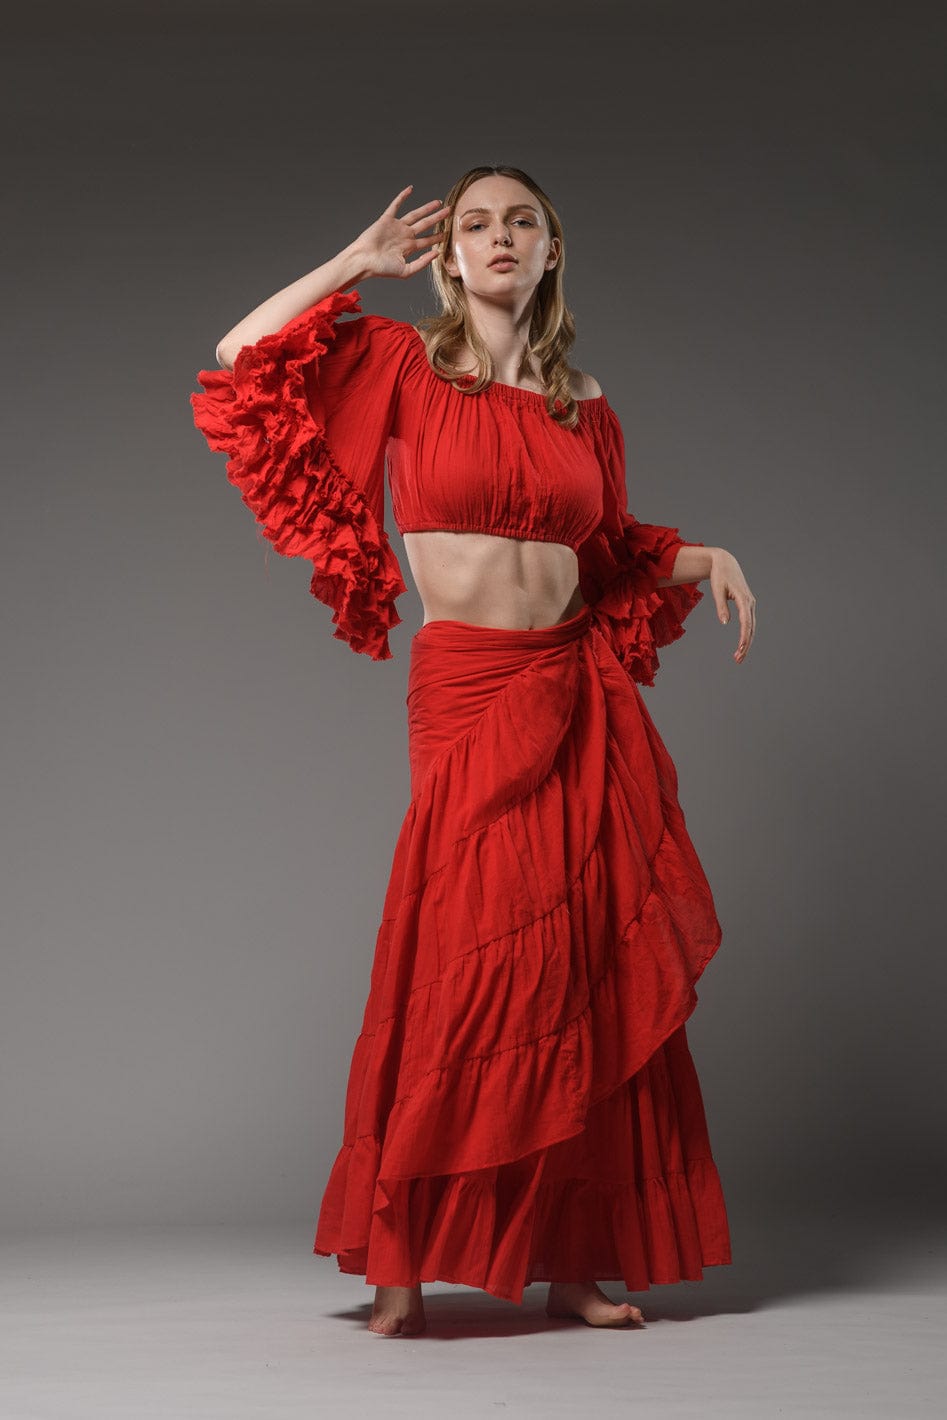 Bohemian chic gypsy fashion long wrap ruffled red cotton Skirt